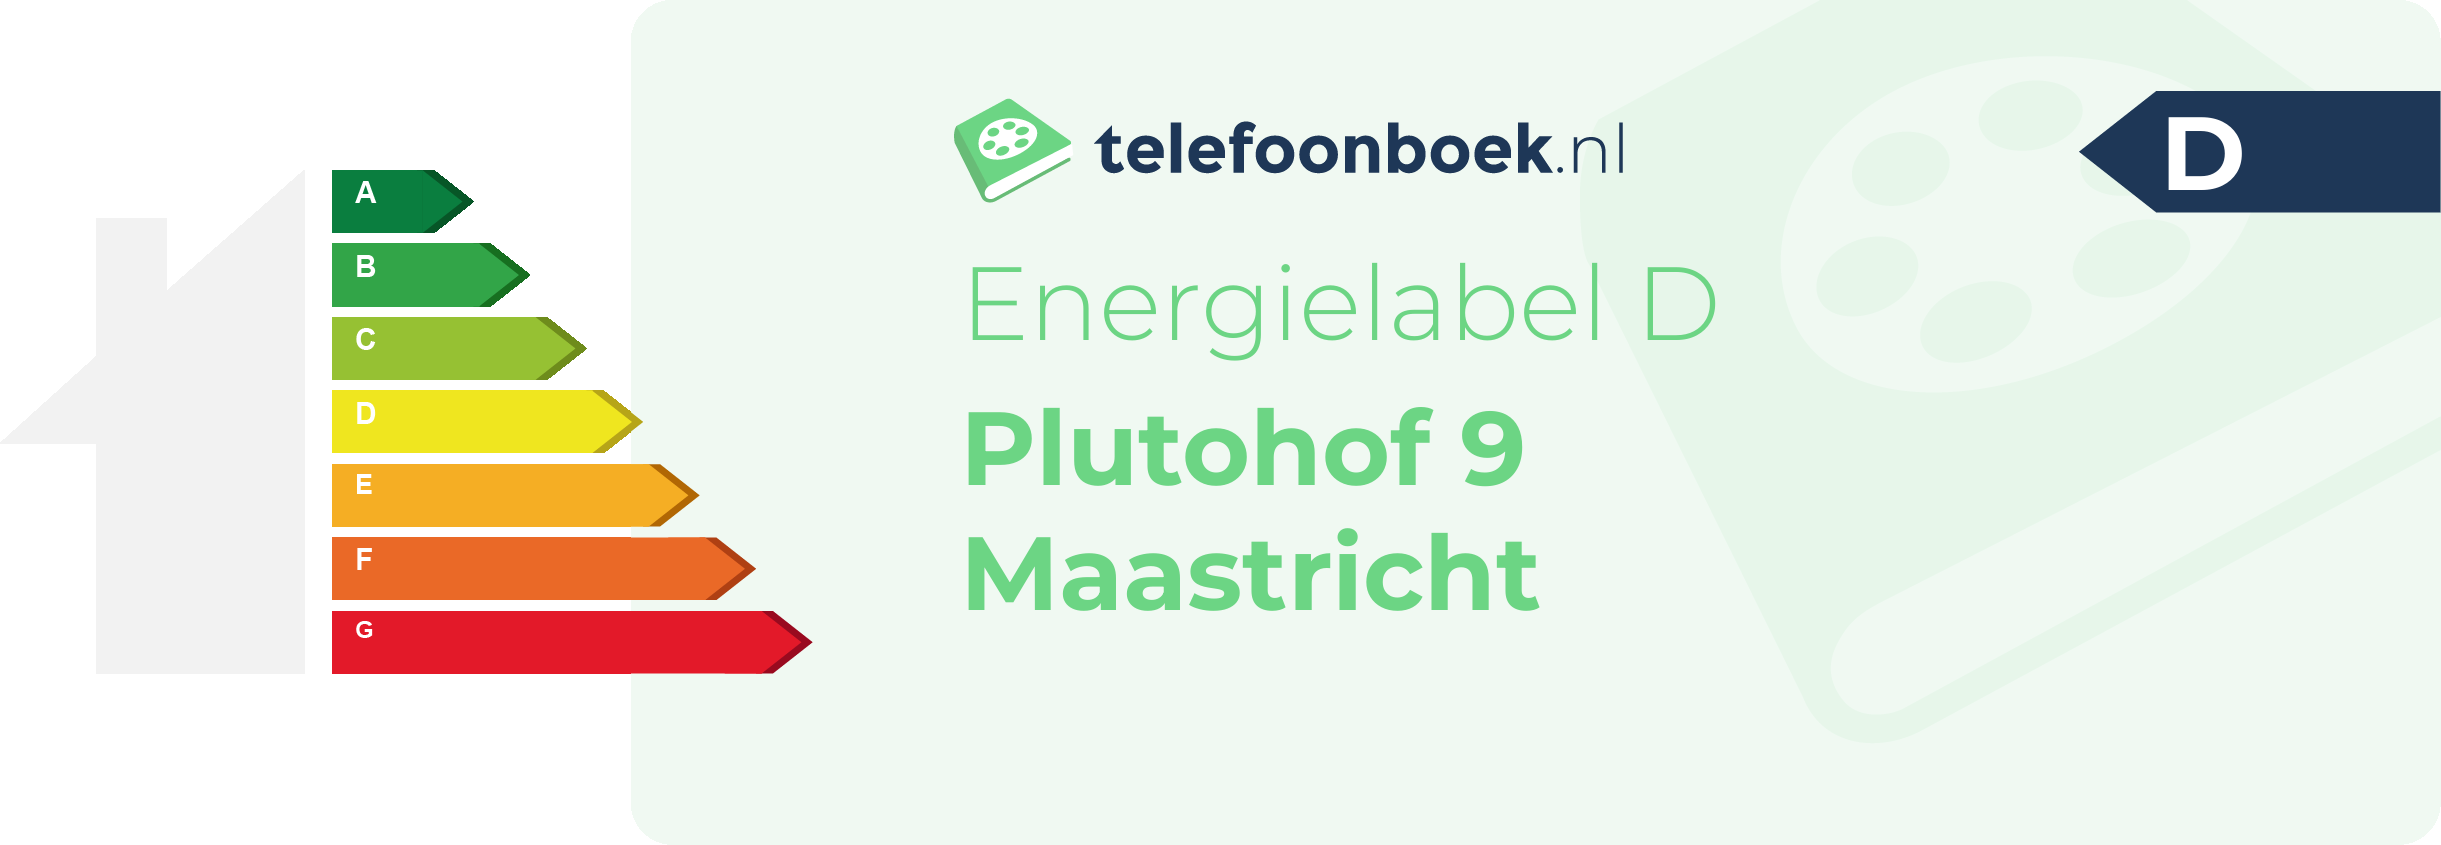 Energielabel Plutohof 9 Maastricht